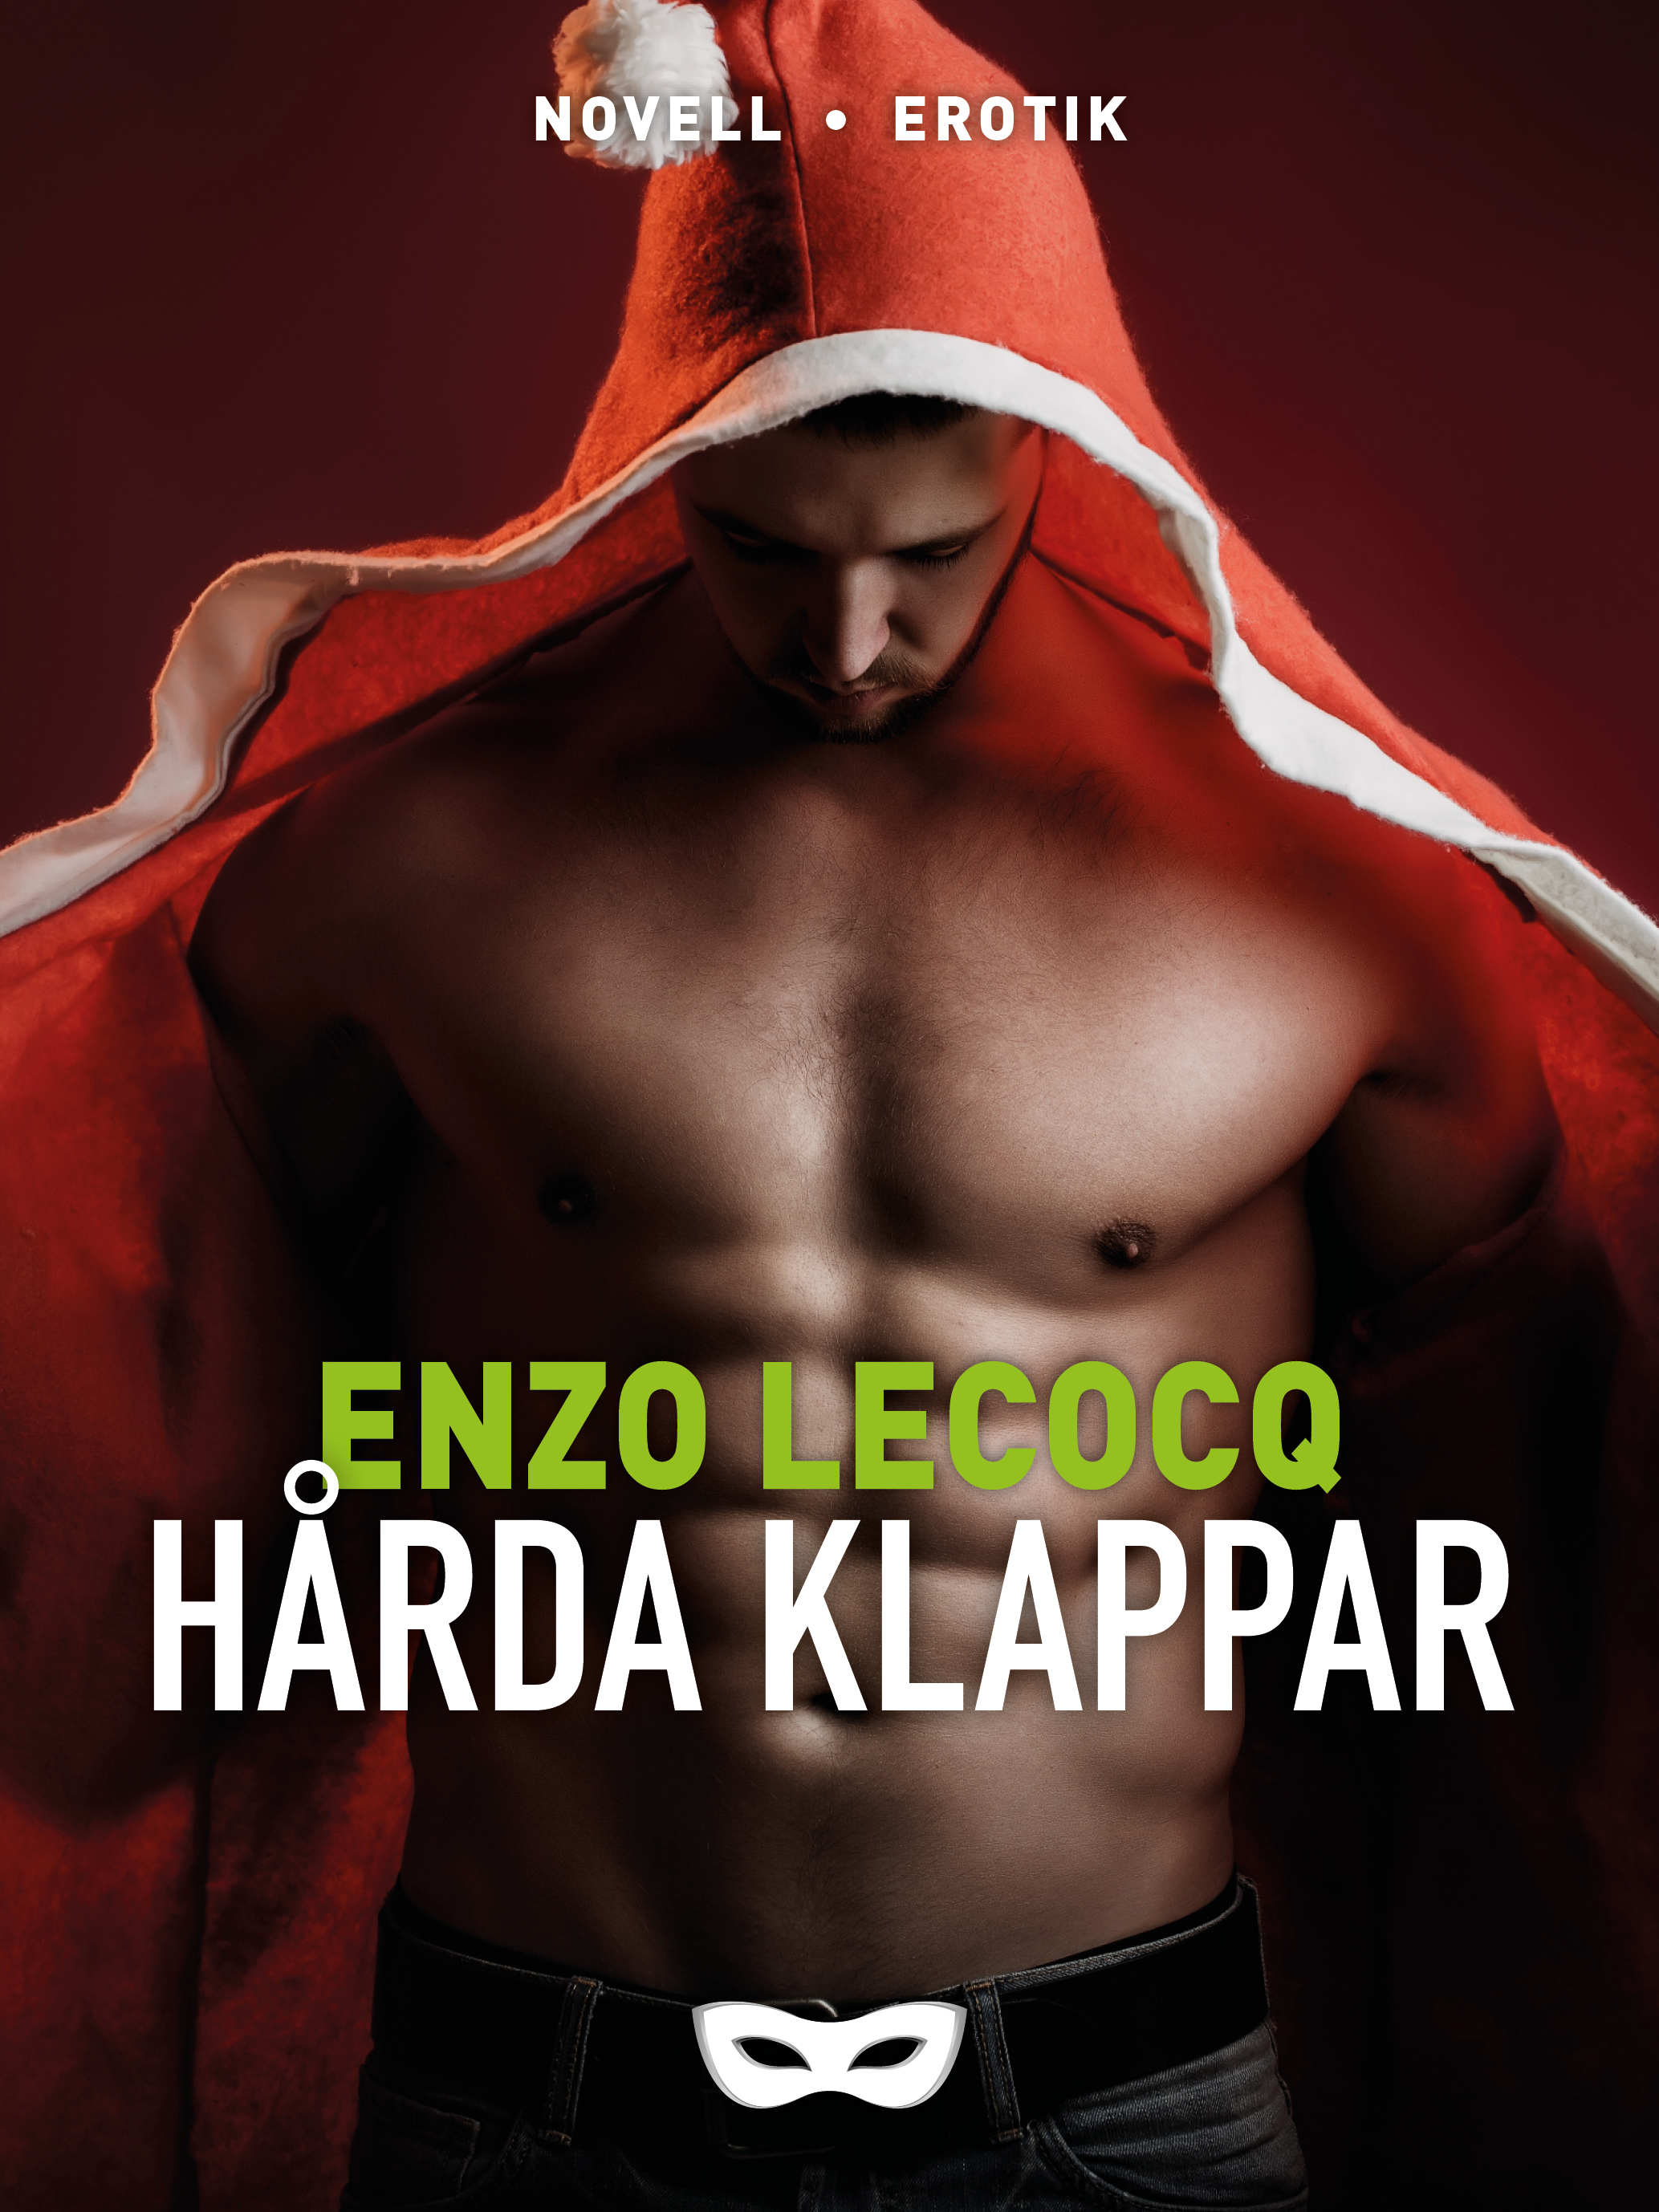 JUL-n_Harda klappar_Enzo Lecocq.jpg